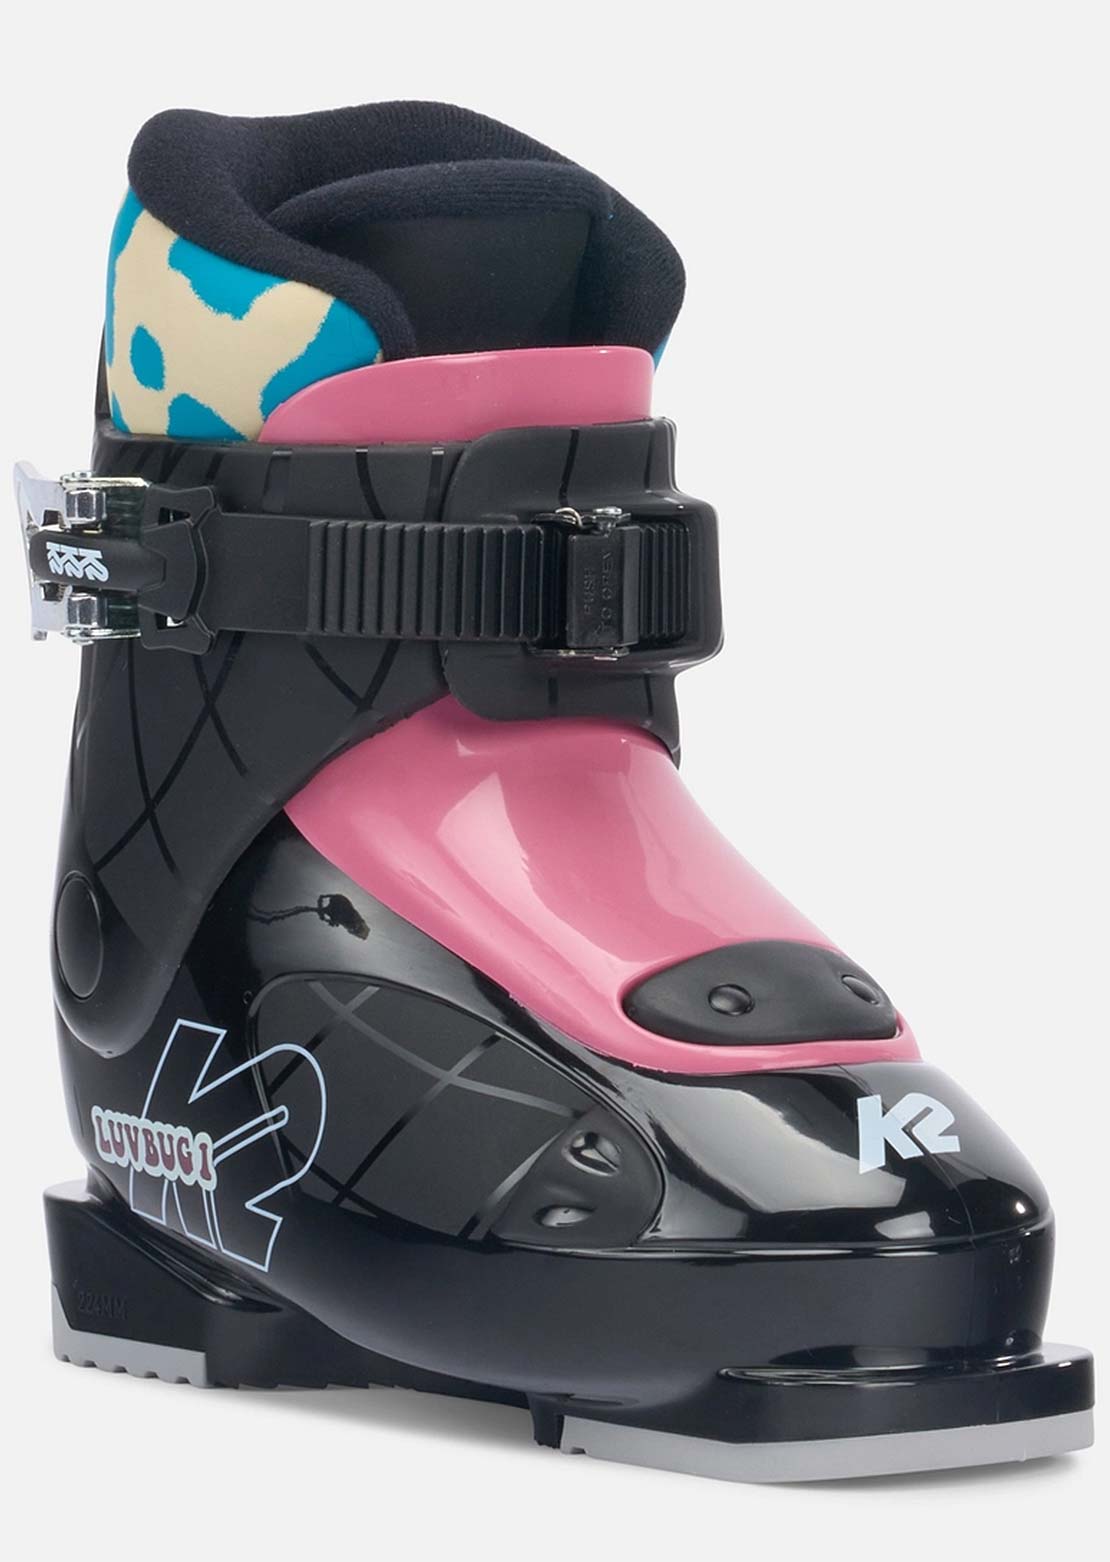 K2 Junior Luv Bug 1 Ski Boots